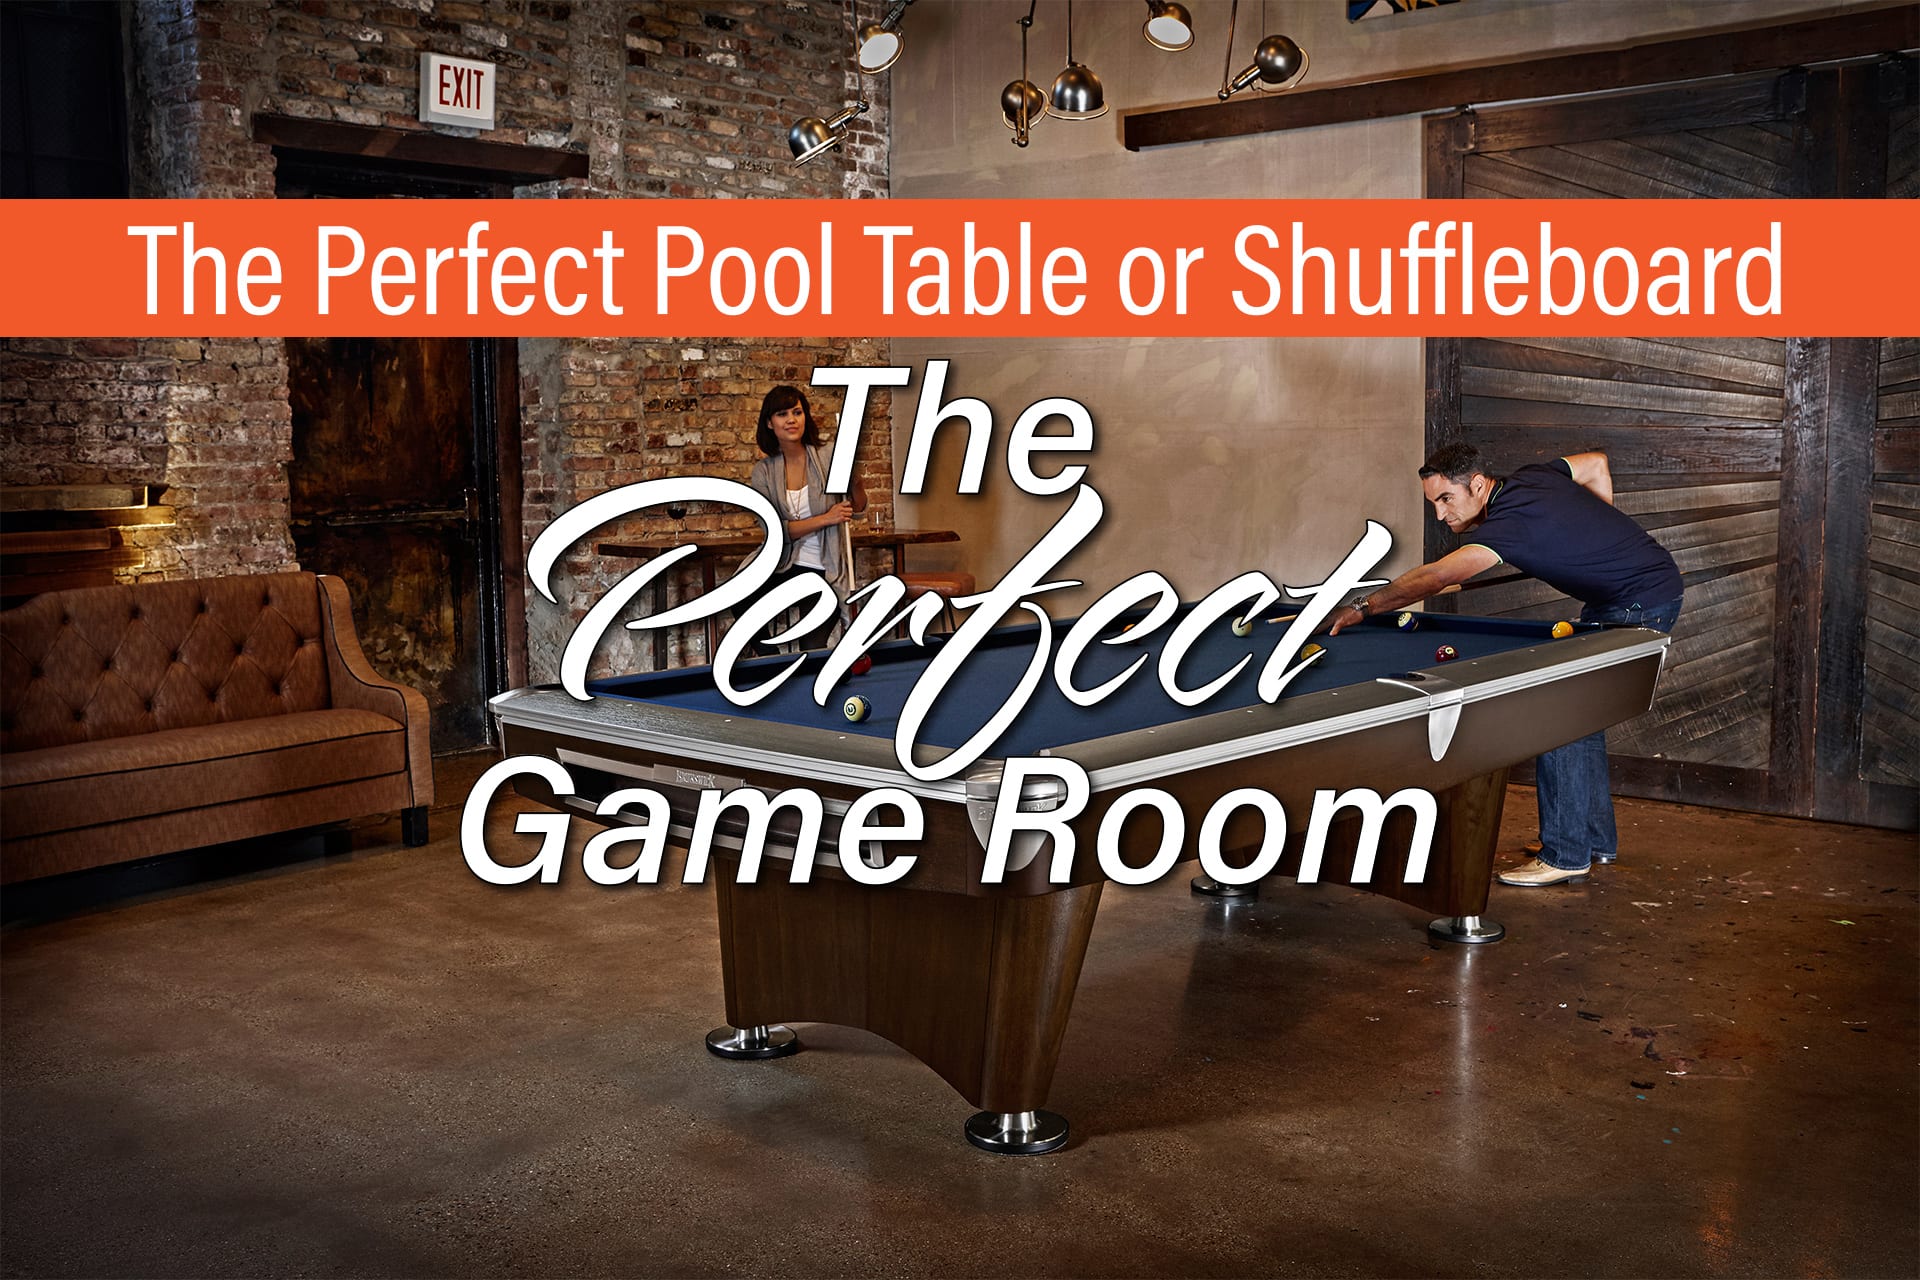 The Perfect Pool Table or Shuffleboard